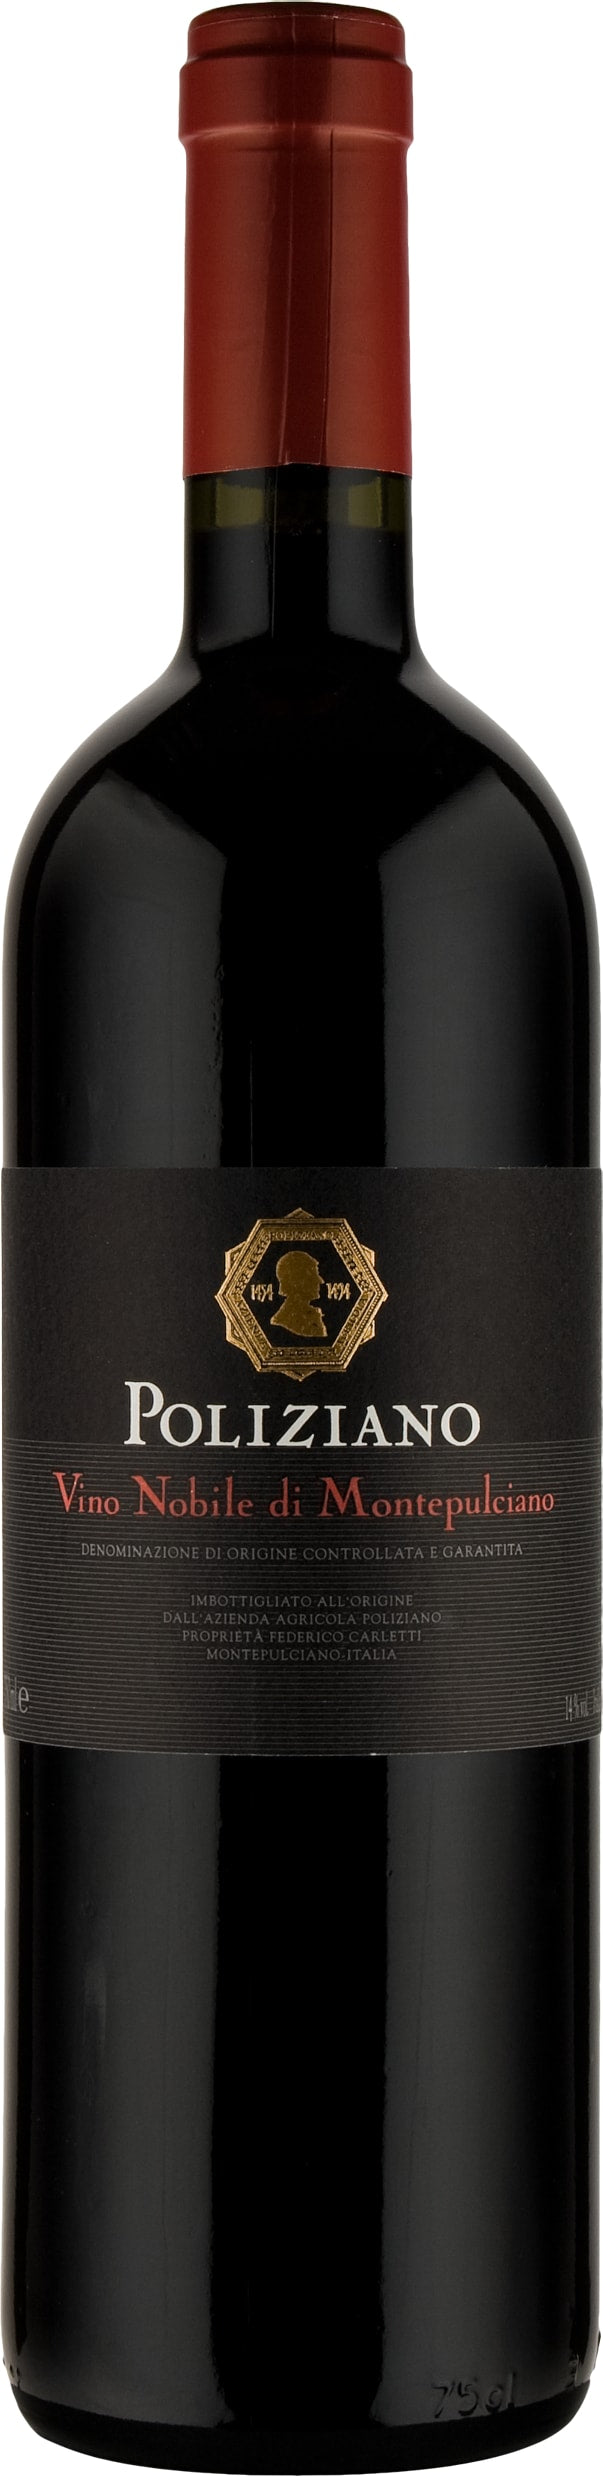 Poliziano Vino Nobile di Montepulciano 2020 75cl - Buy Poliziano Wines from GREAT WINES DIRECT wine shop